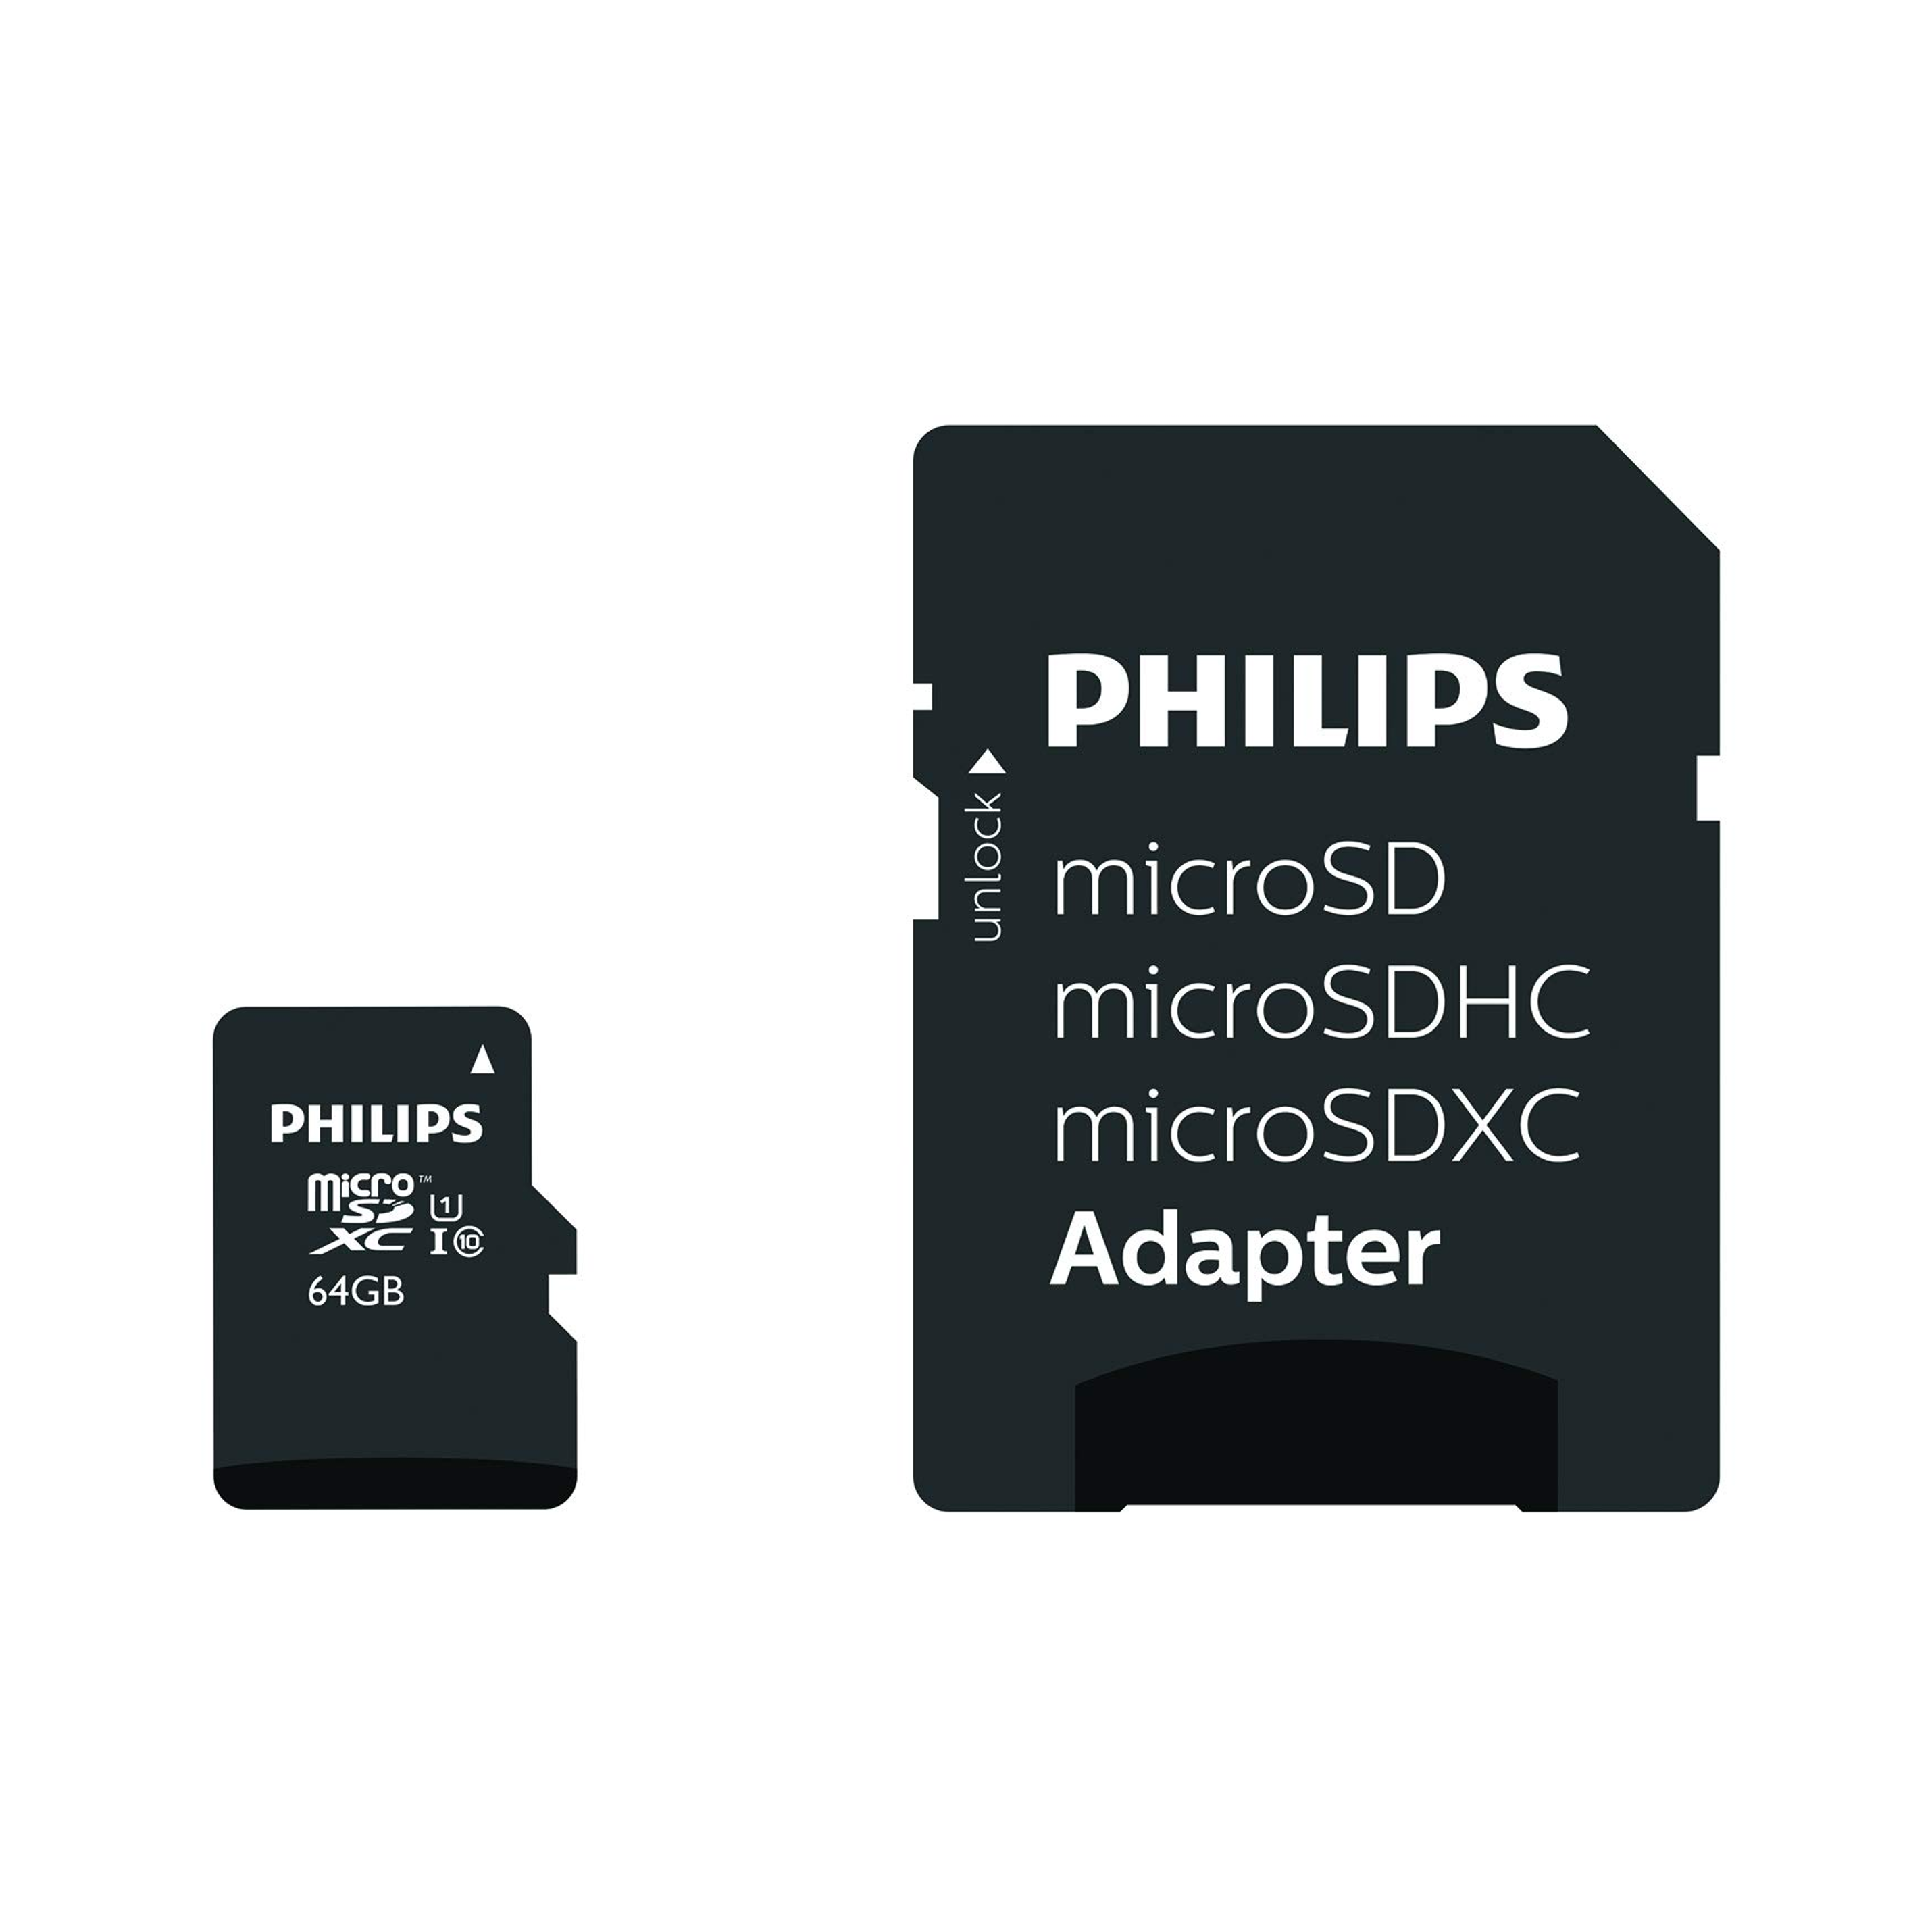 10 UHS-I 80 Class Mbit/s Micro-SDHC Adapter, GB, U1, 64 Micro-SDHX PHILIPS Speicherkarte, 64